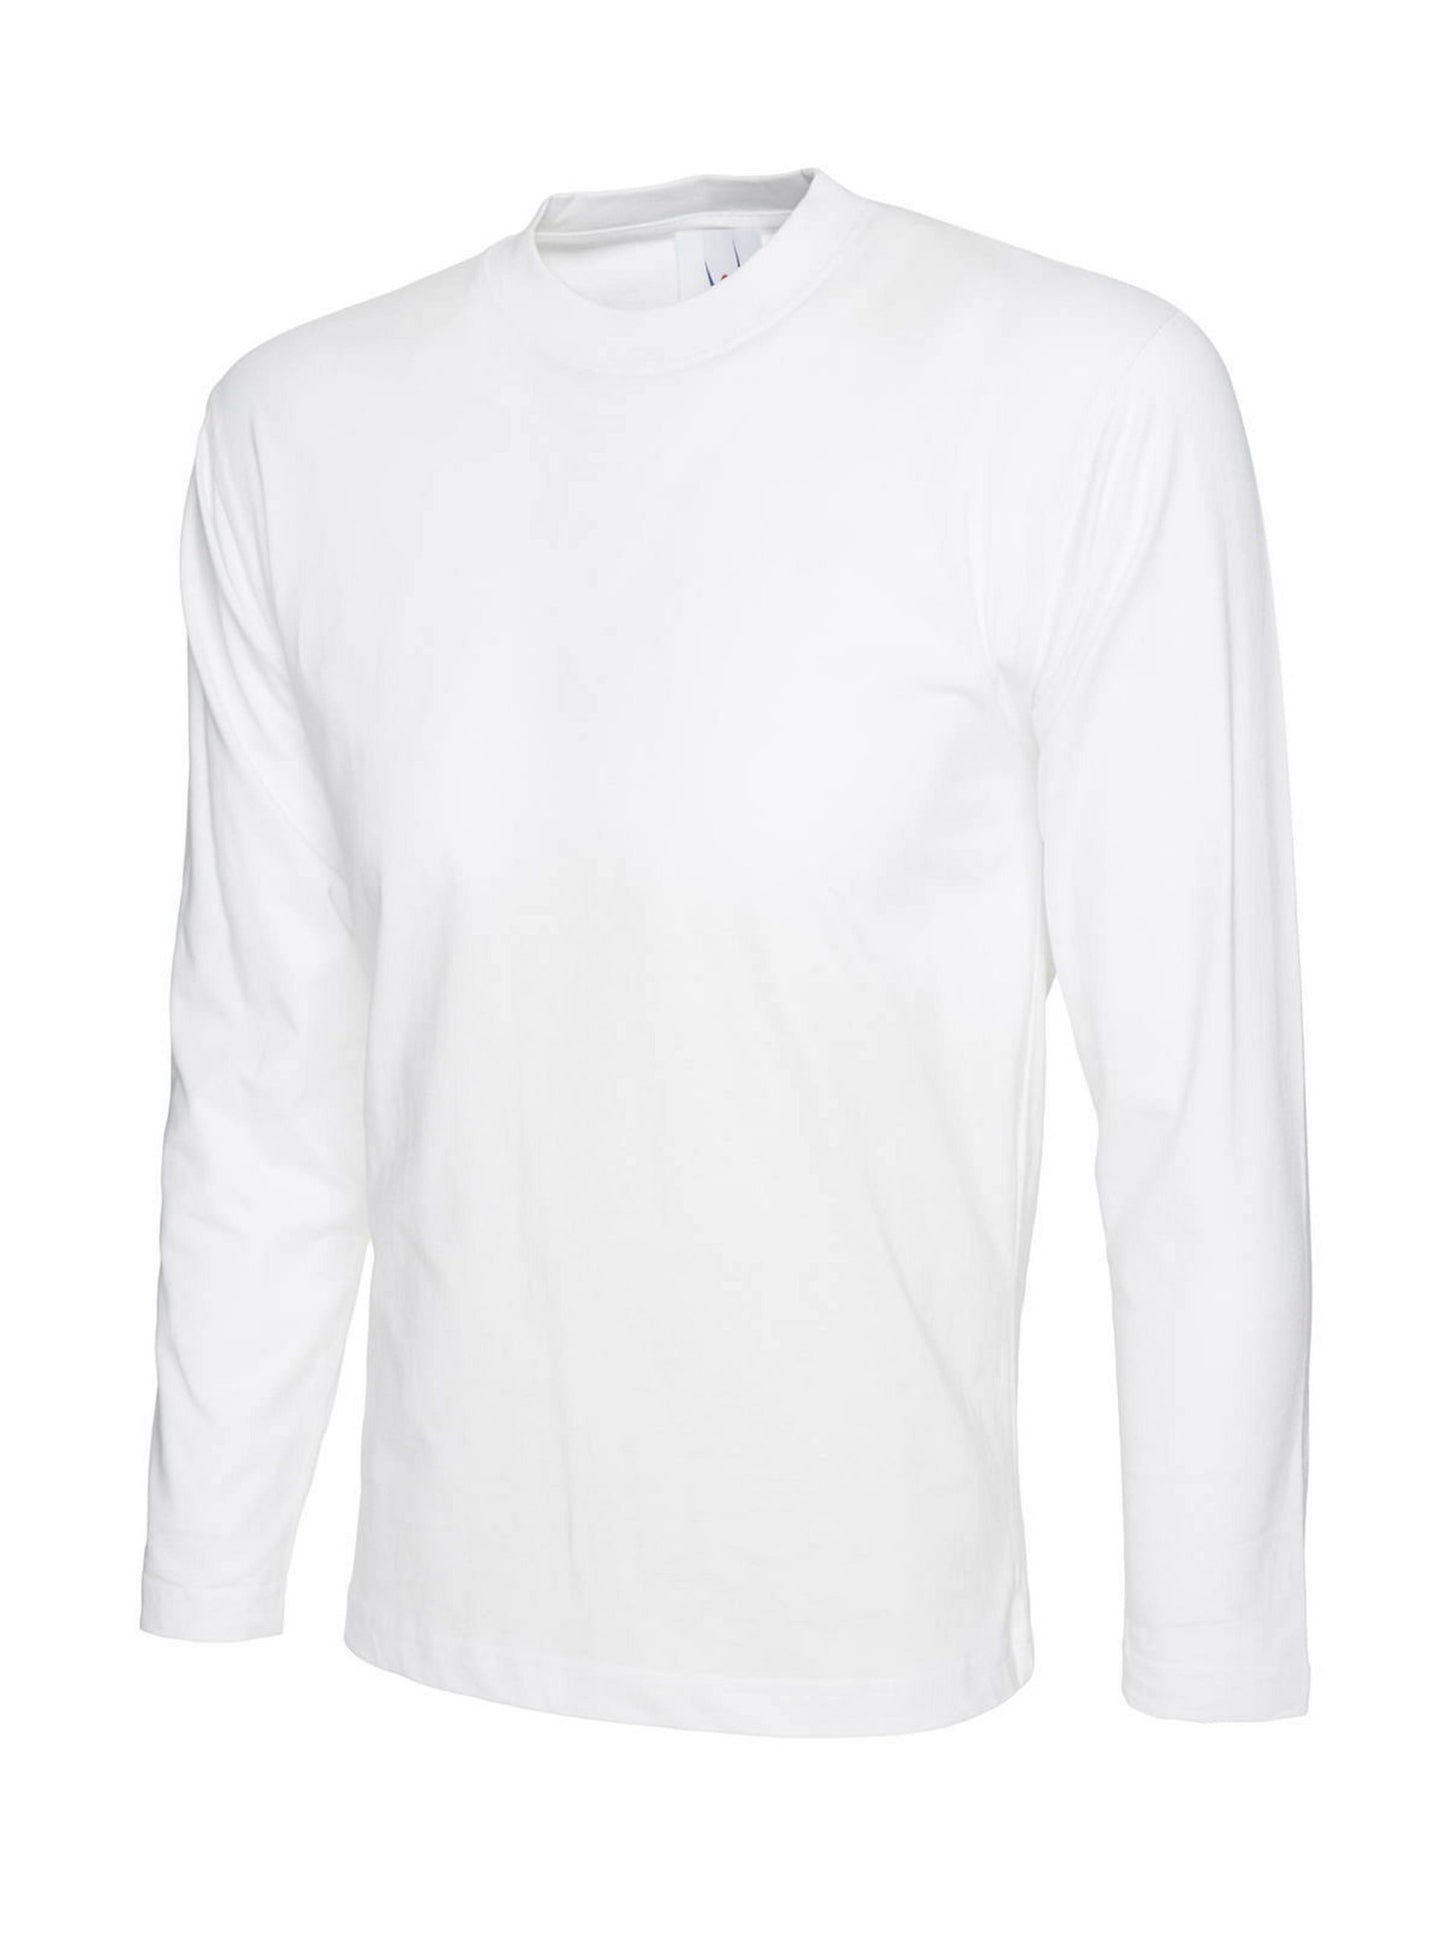 UC314 - Long Sleeve T-shirt